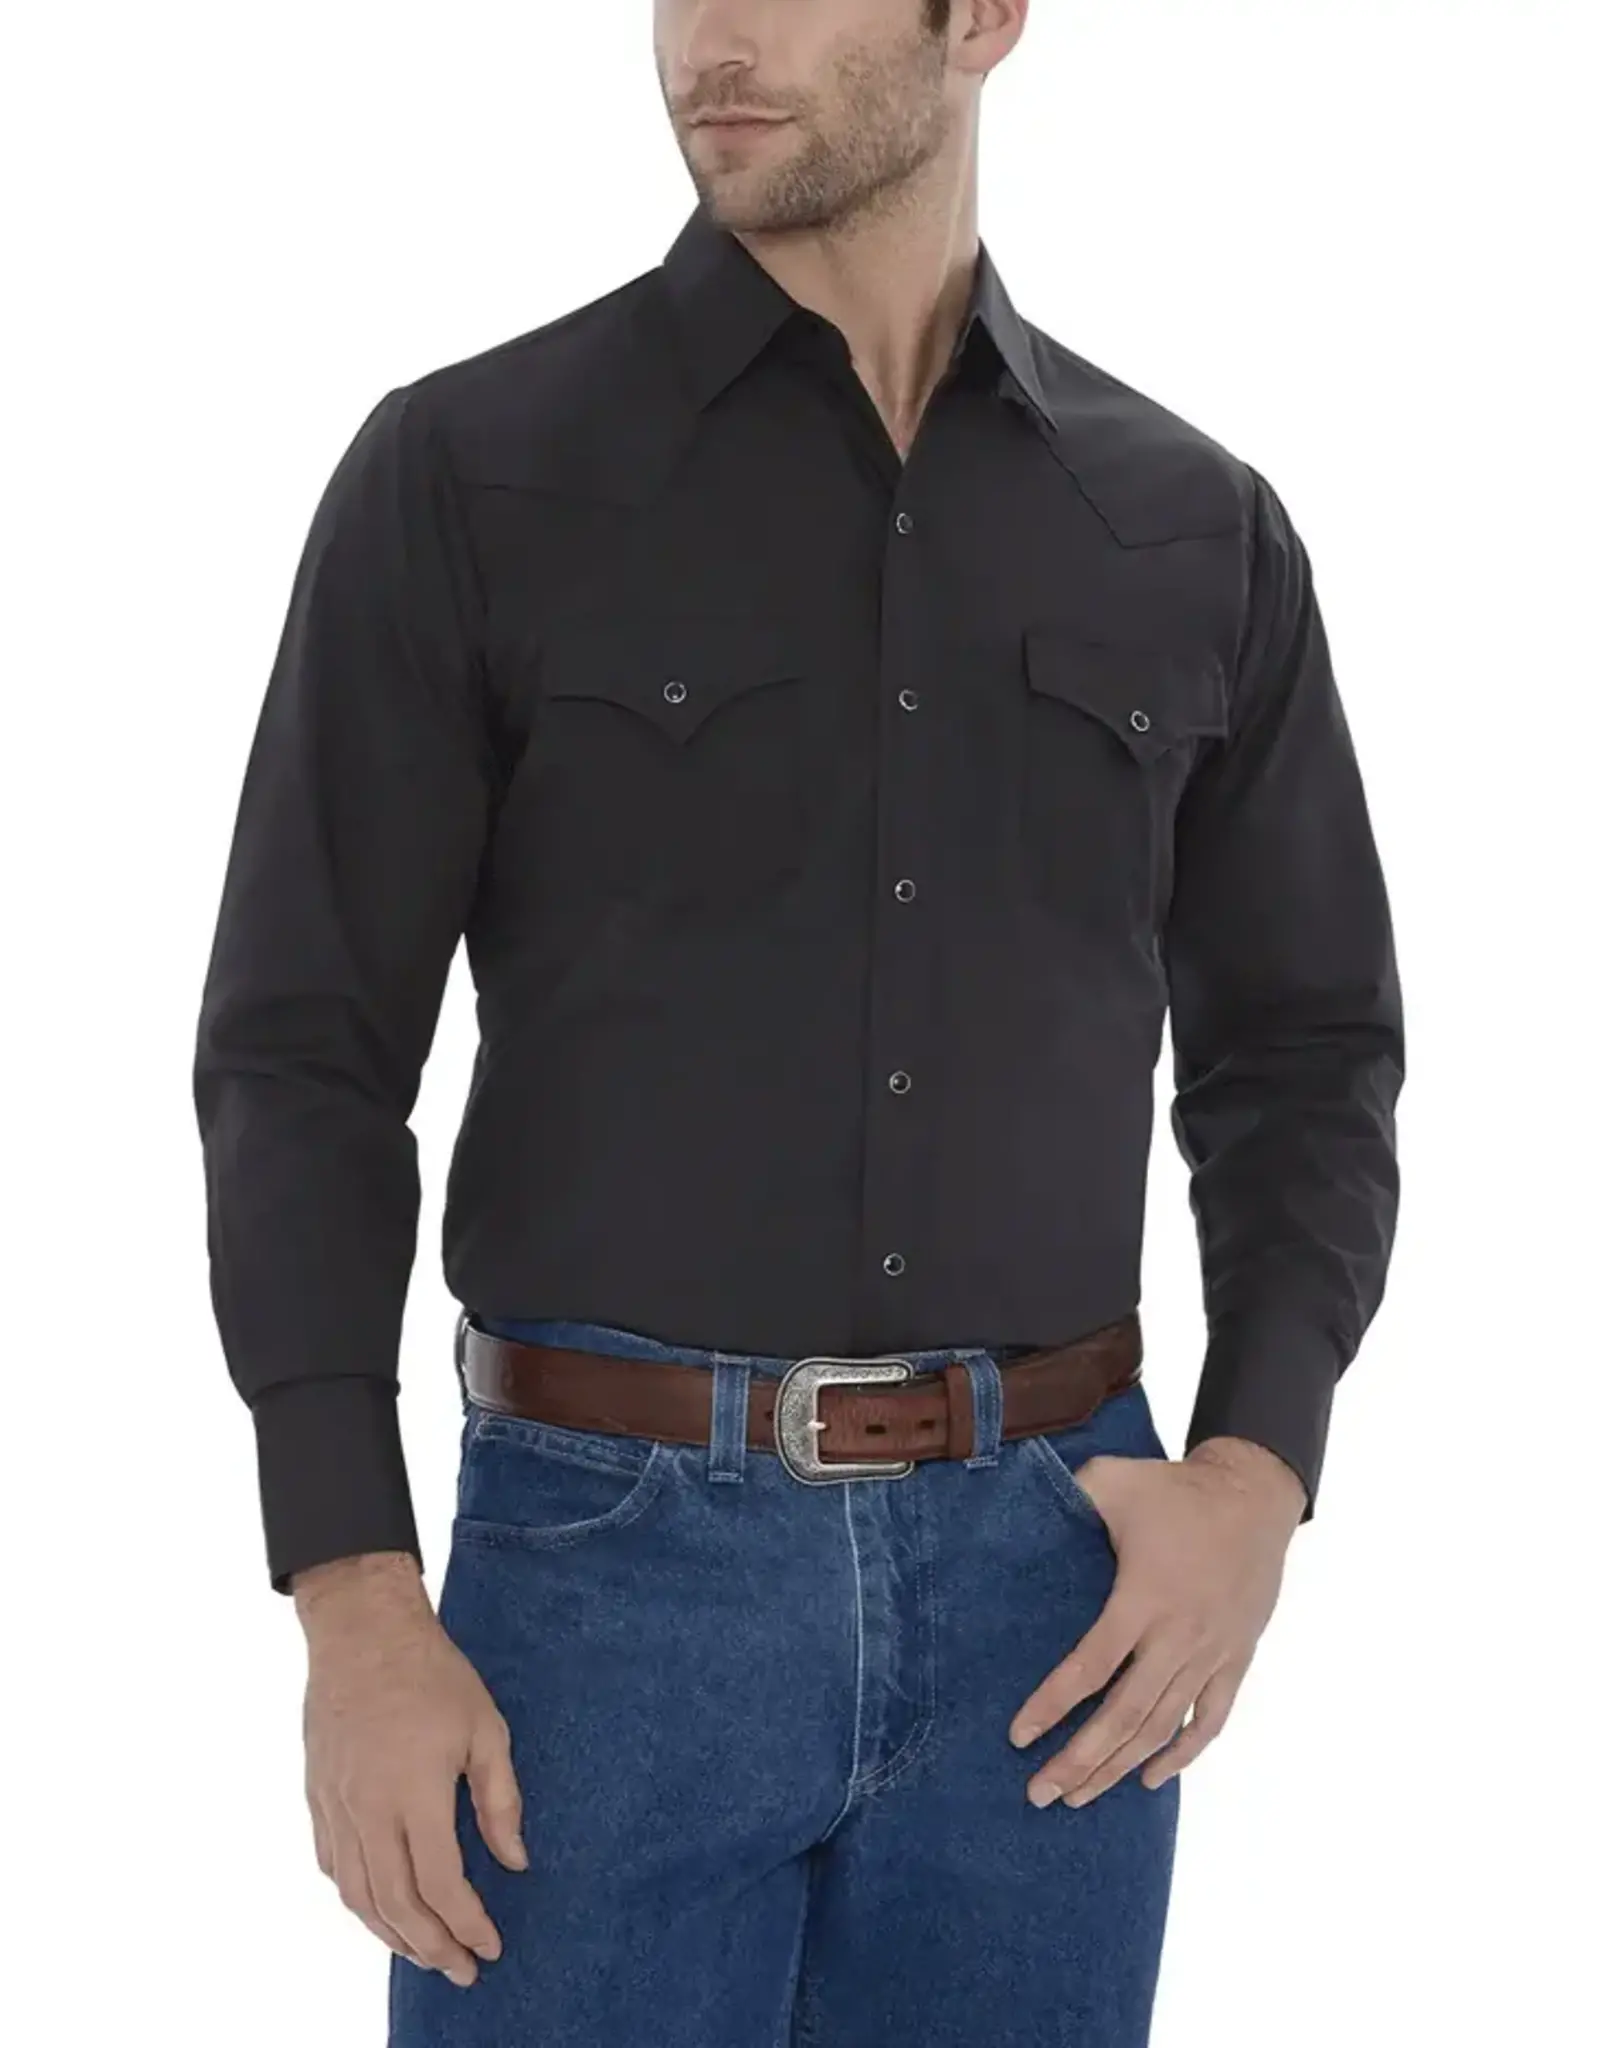 Ely Mens LS Shirt in Black Sz. 4X 15201905-89X